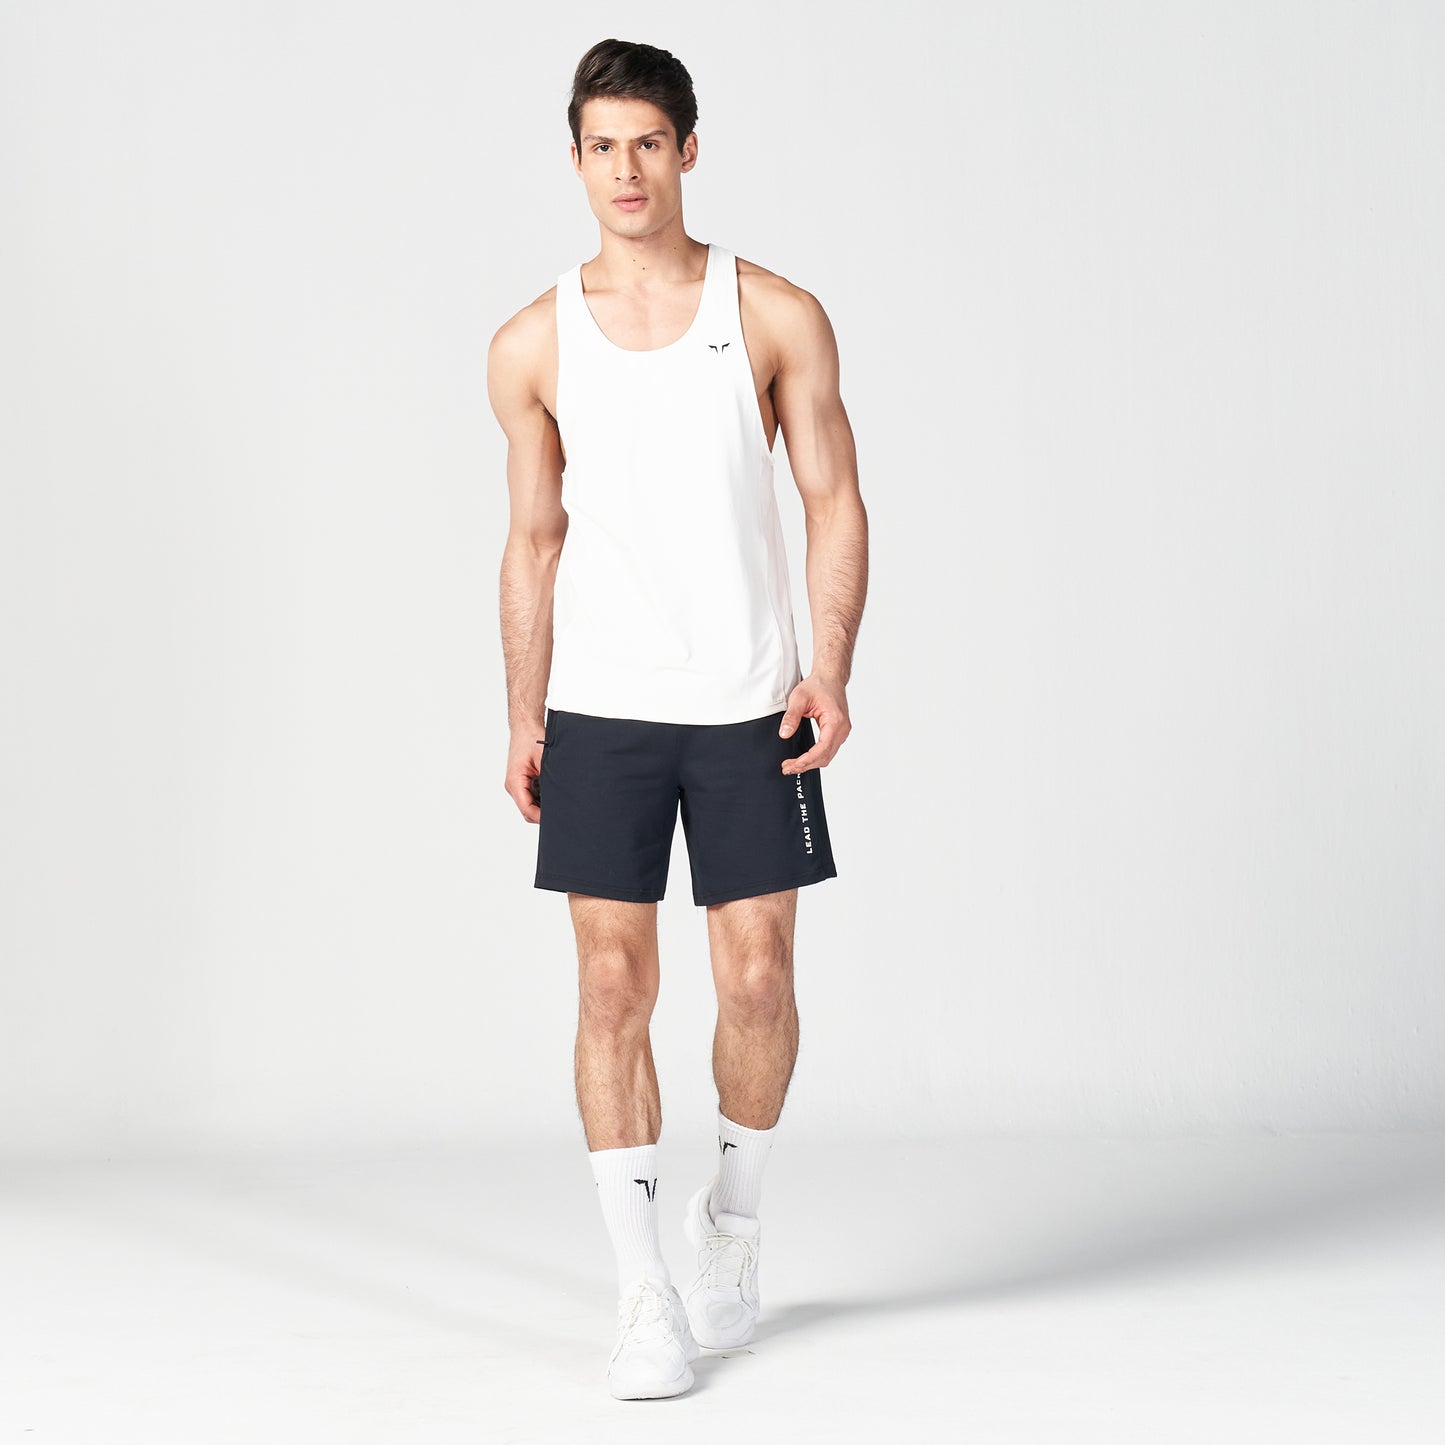 squatwolf-gym-wear-core-aerotech-tank-white-stringer-vests-for-men